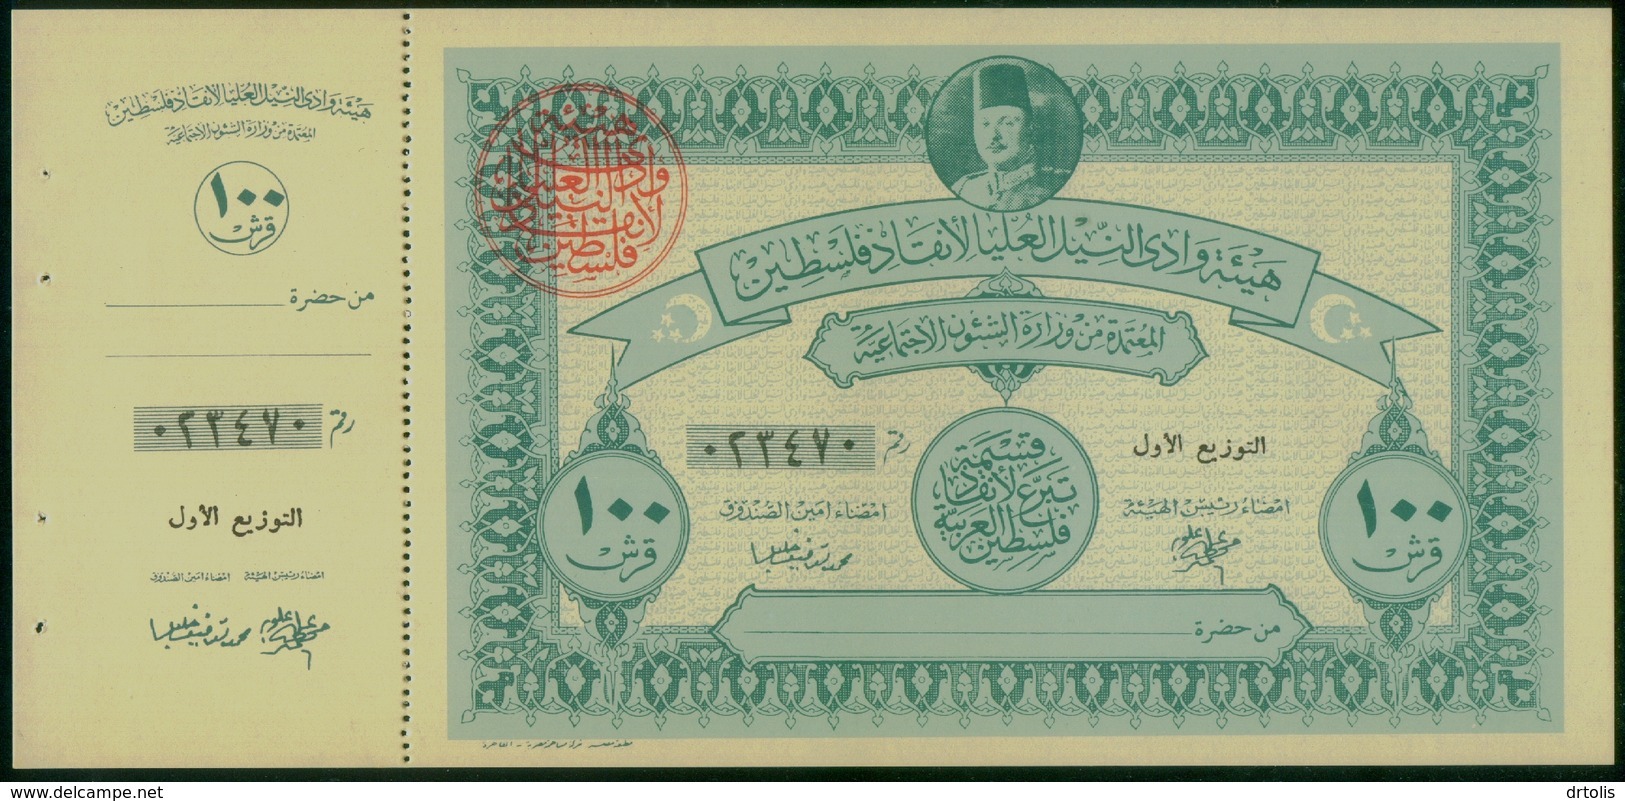 EGYPT / 1948 / KING FAROK DONATION TO SAVE PALESTINE / UNCER. BONDS GROUP OF 7 / 7 SCANS . - Egypt